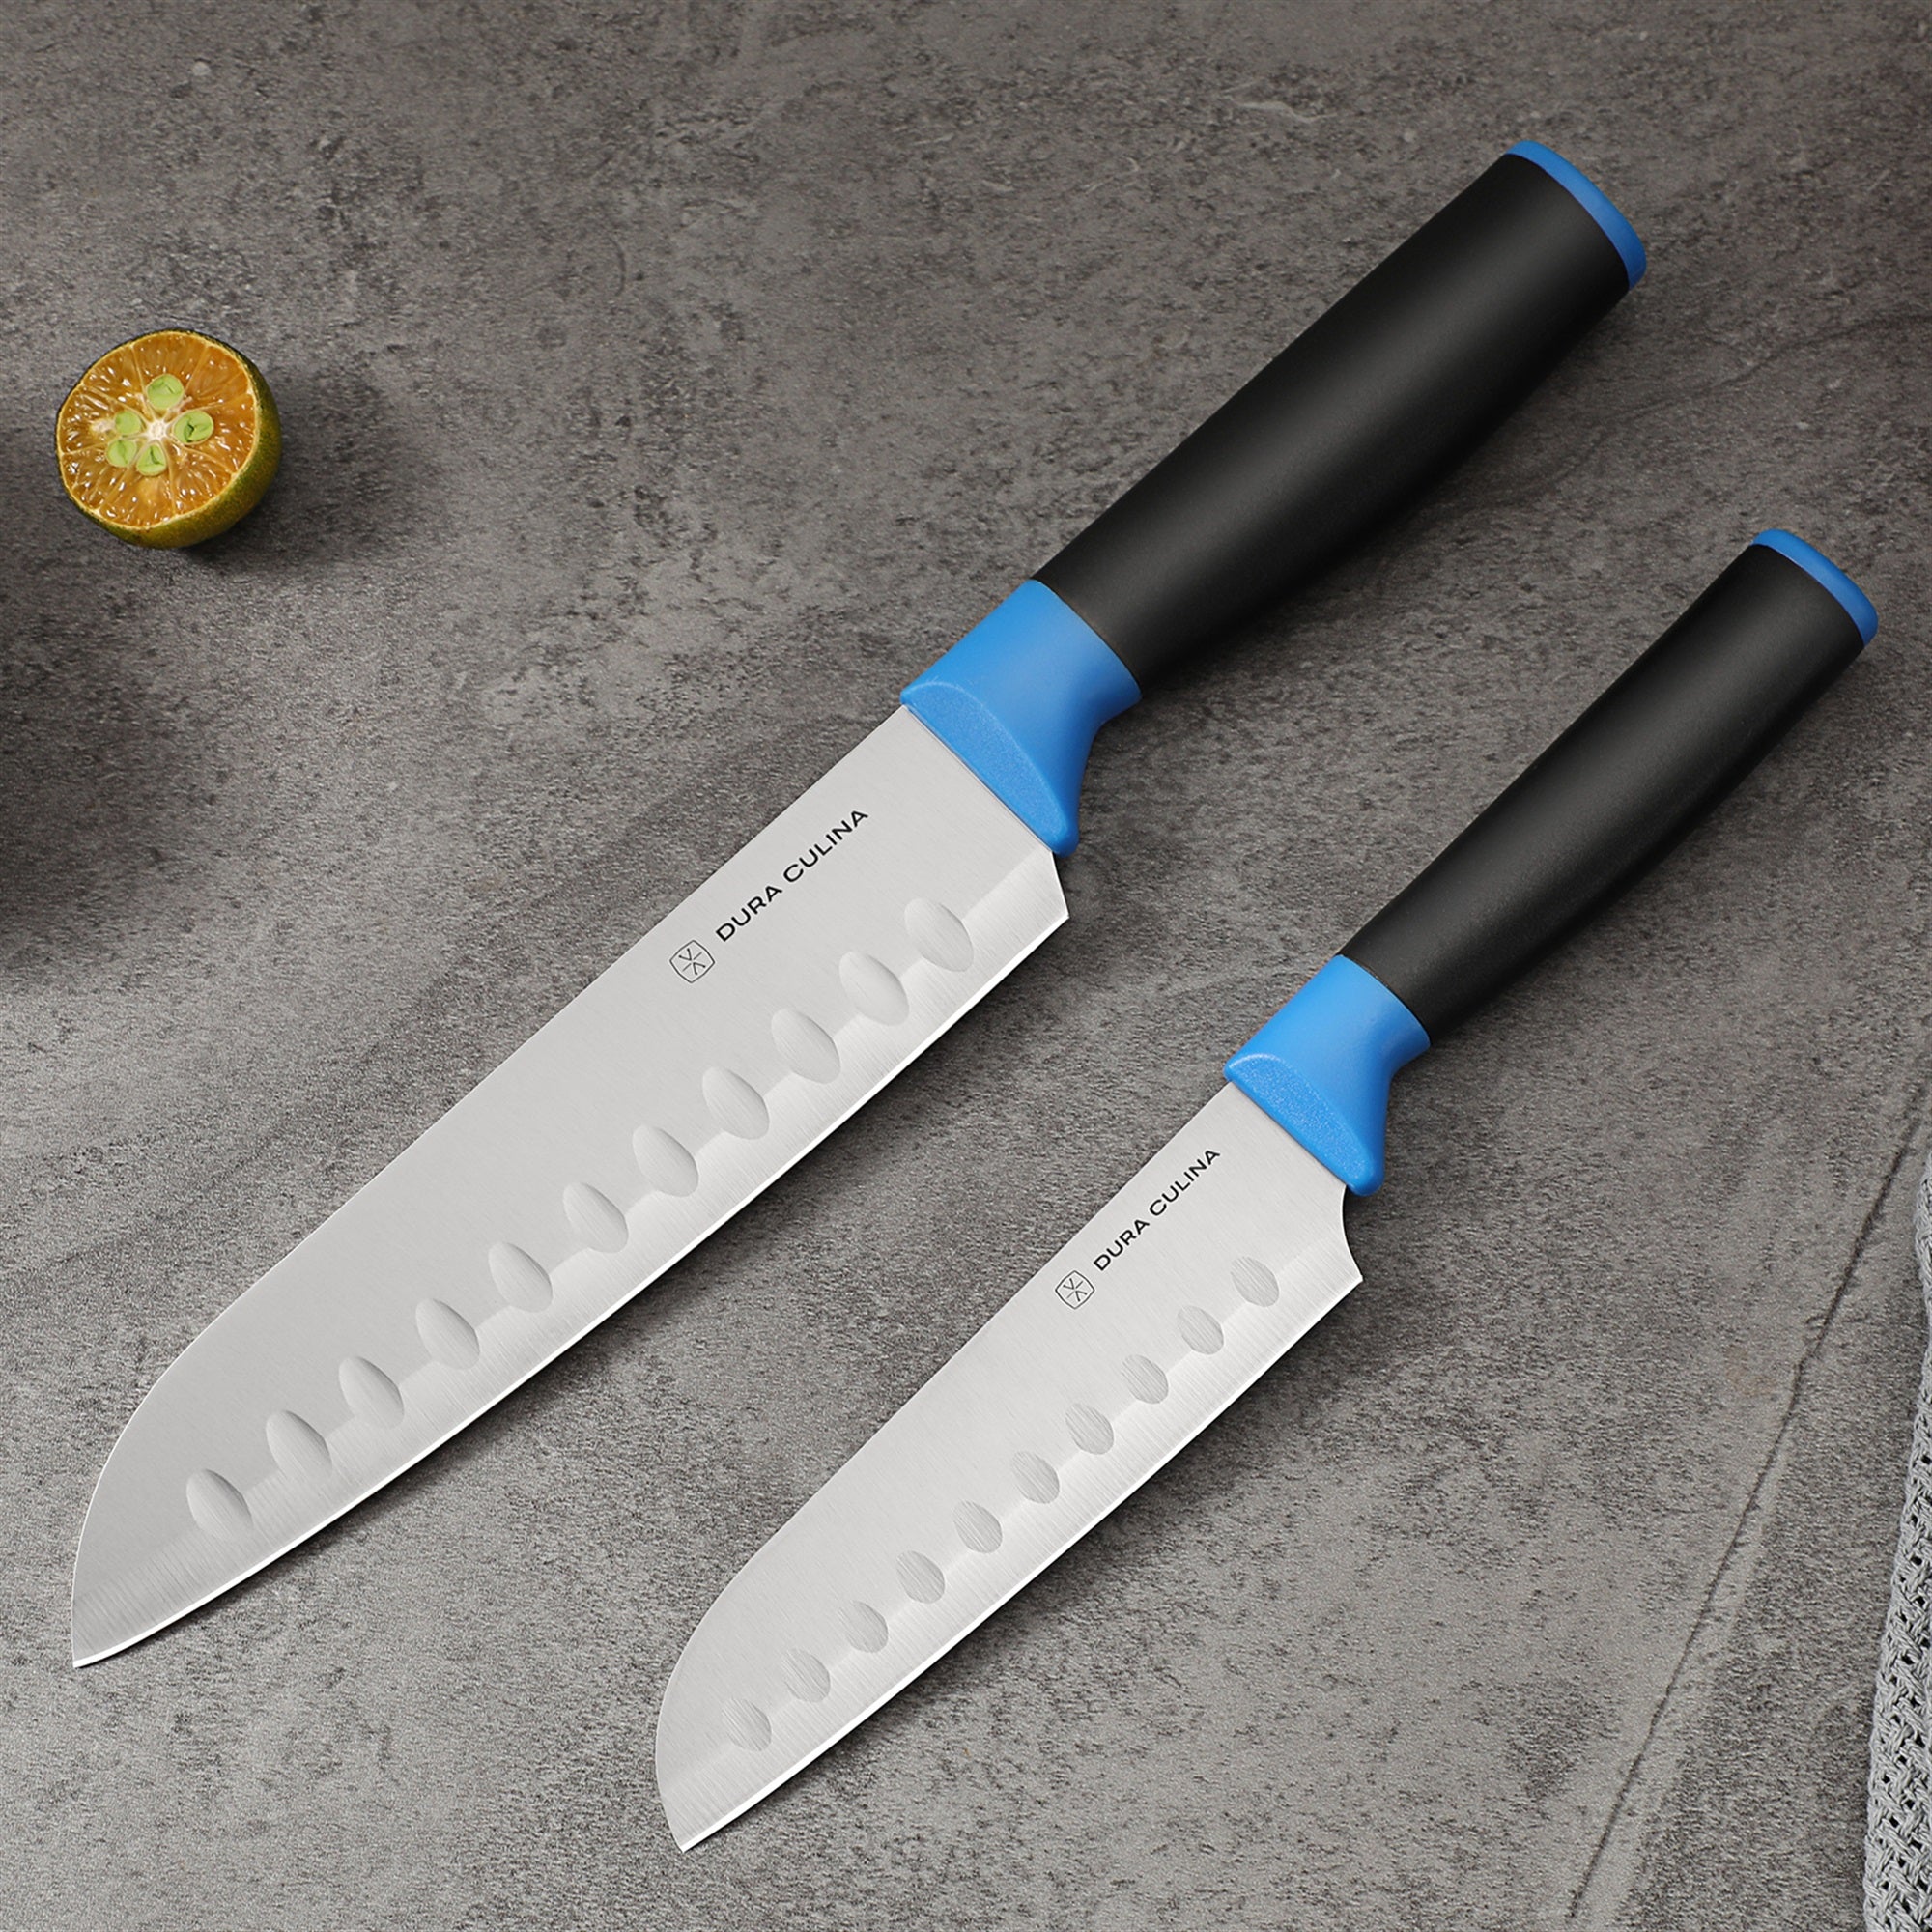 Duo-Grip 2 Piece Santoku Knife Set With Blade Guards, Blue